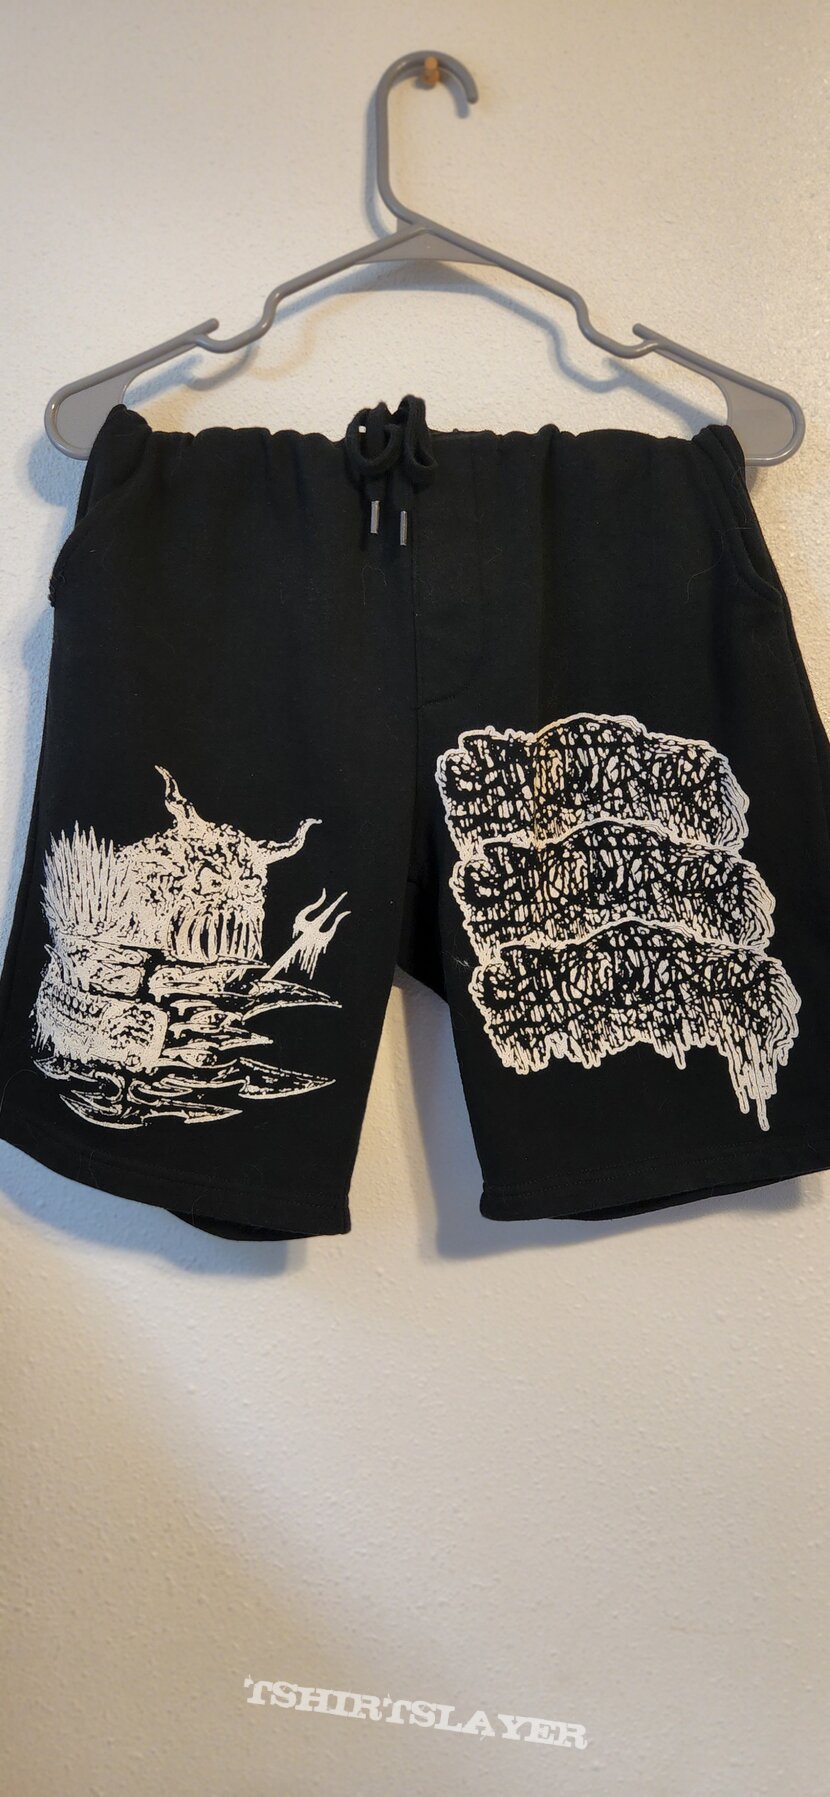 Sanguisugabogg shorts